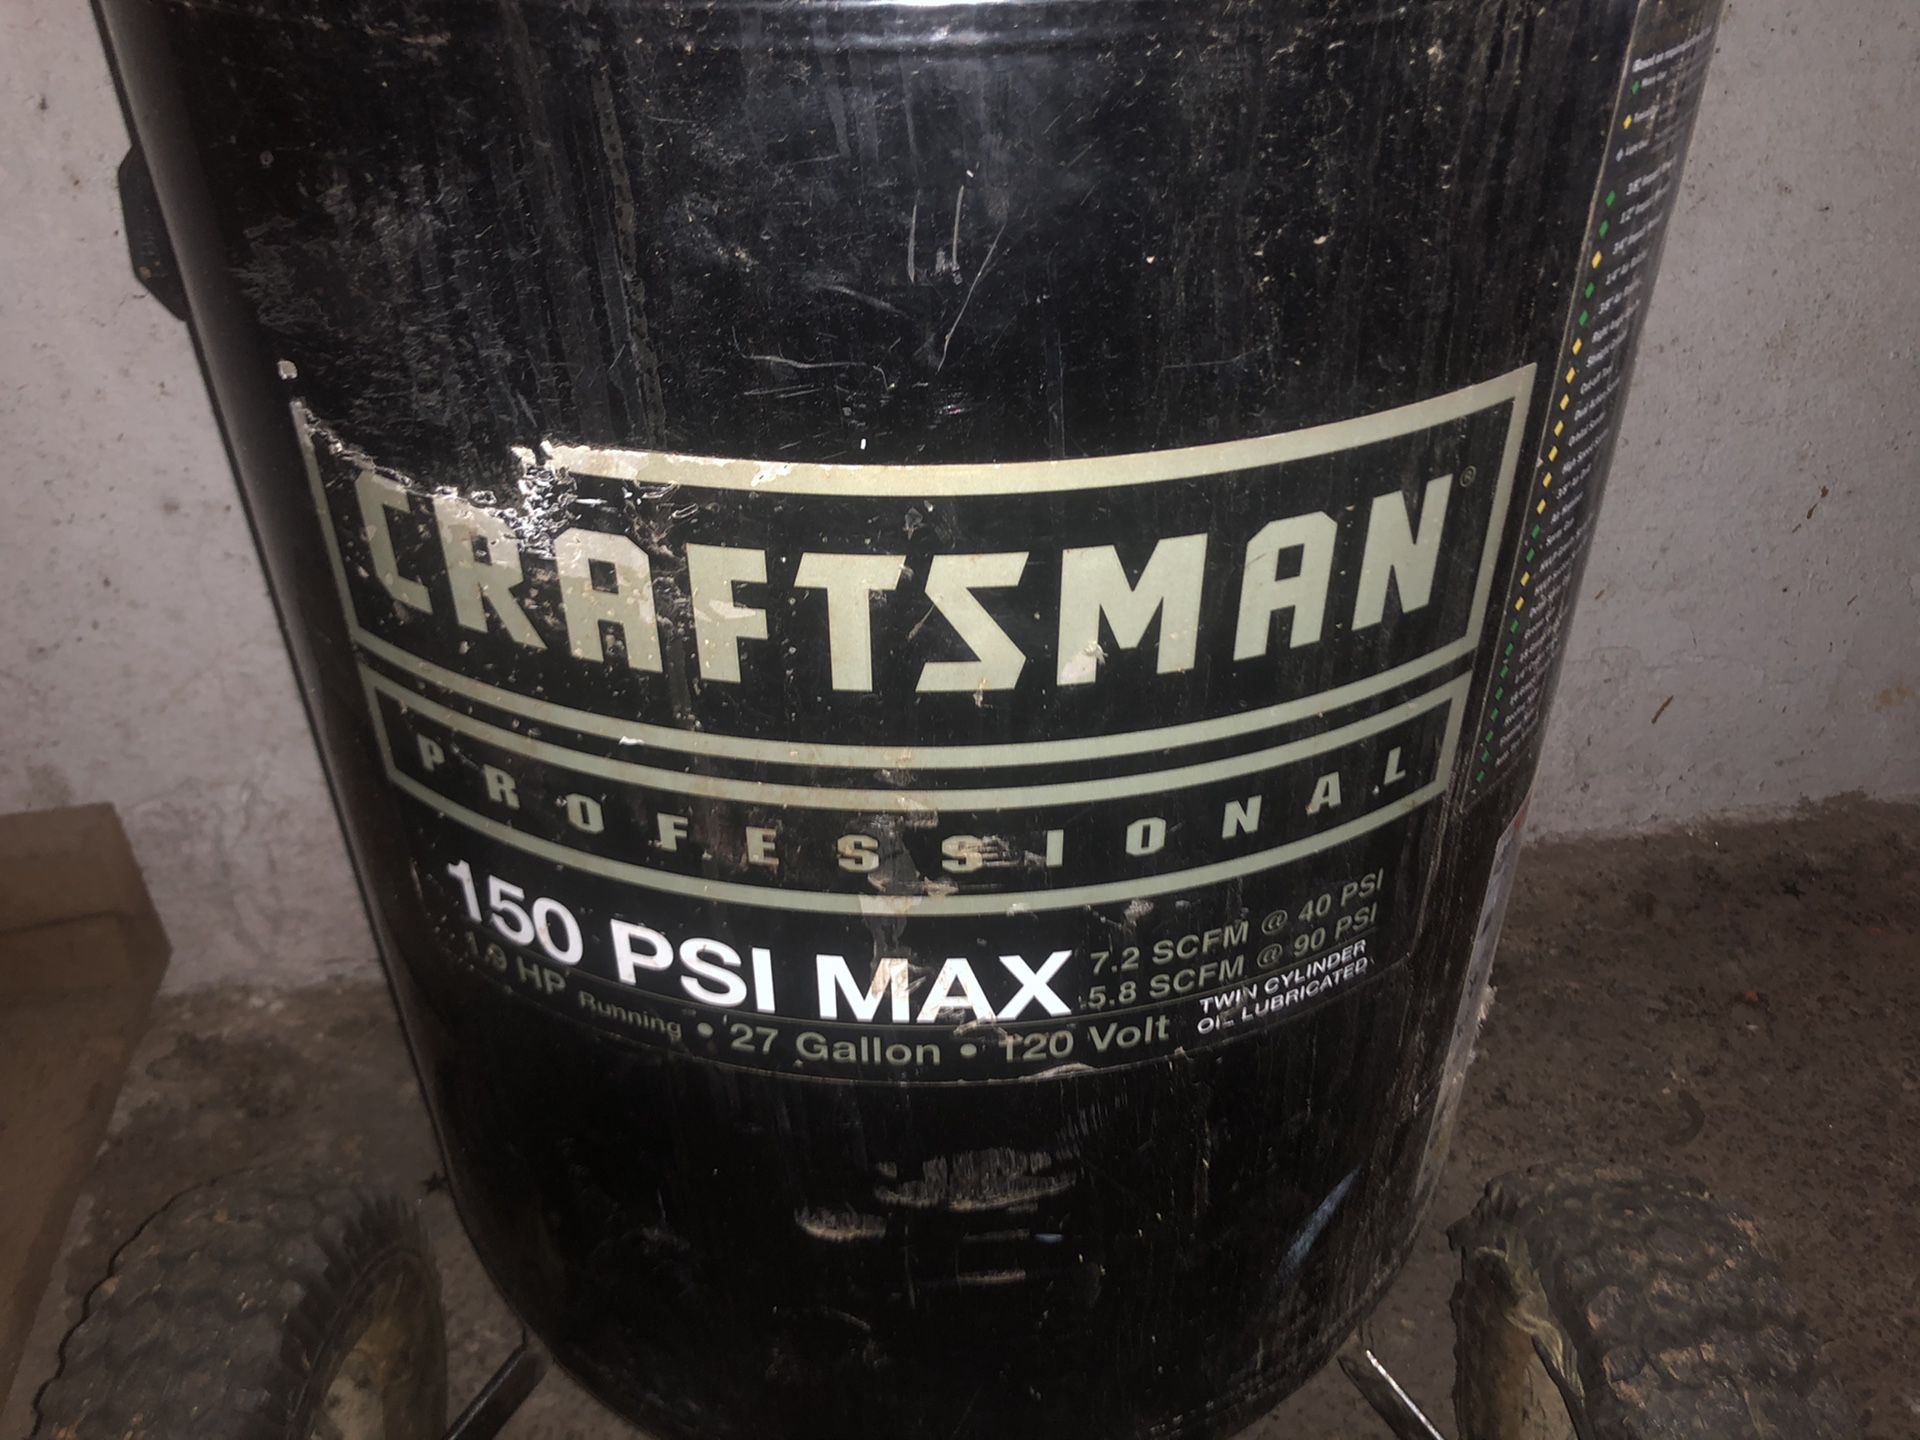 Craftsman Professional 27 Gallon Compressor